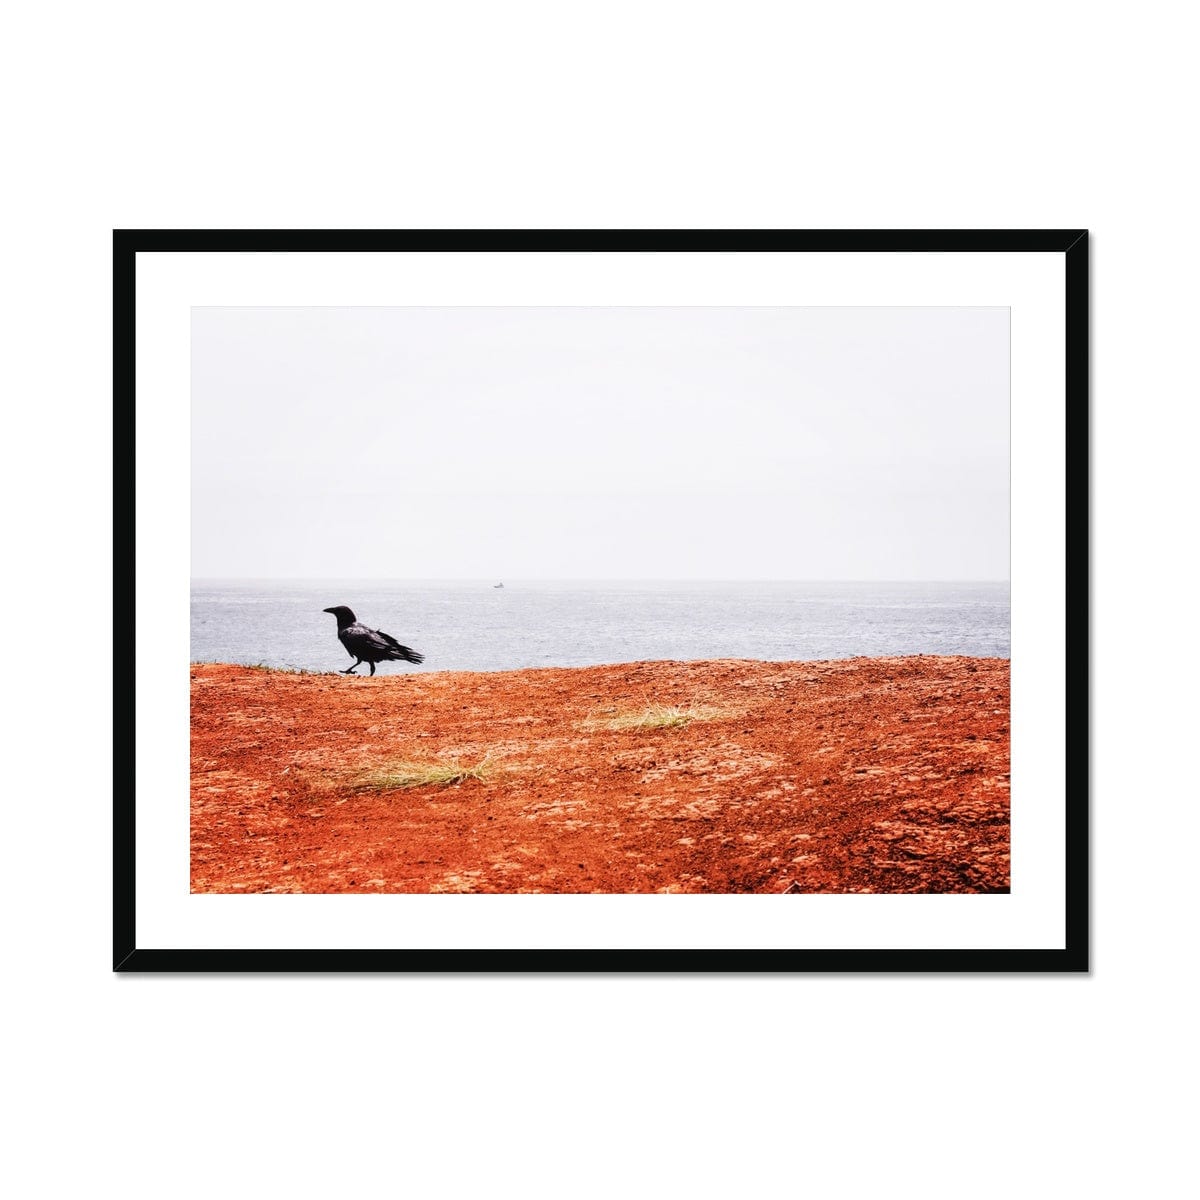 Adam Davies Framed 24"x18" (60.96x45.72cm) / Black Frame Black Crow Framed & Mounted Print